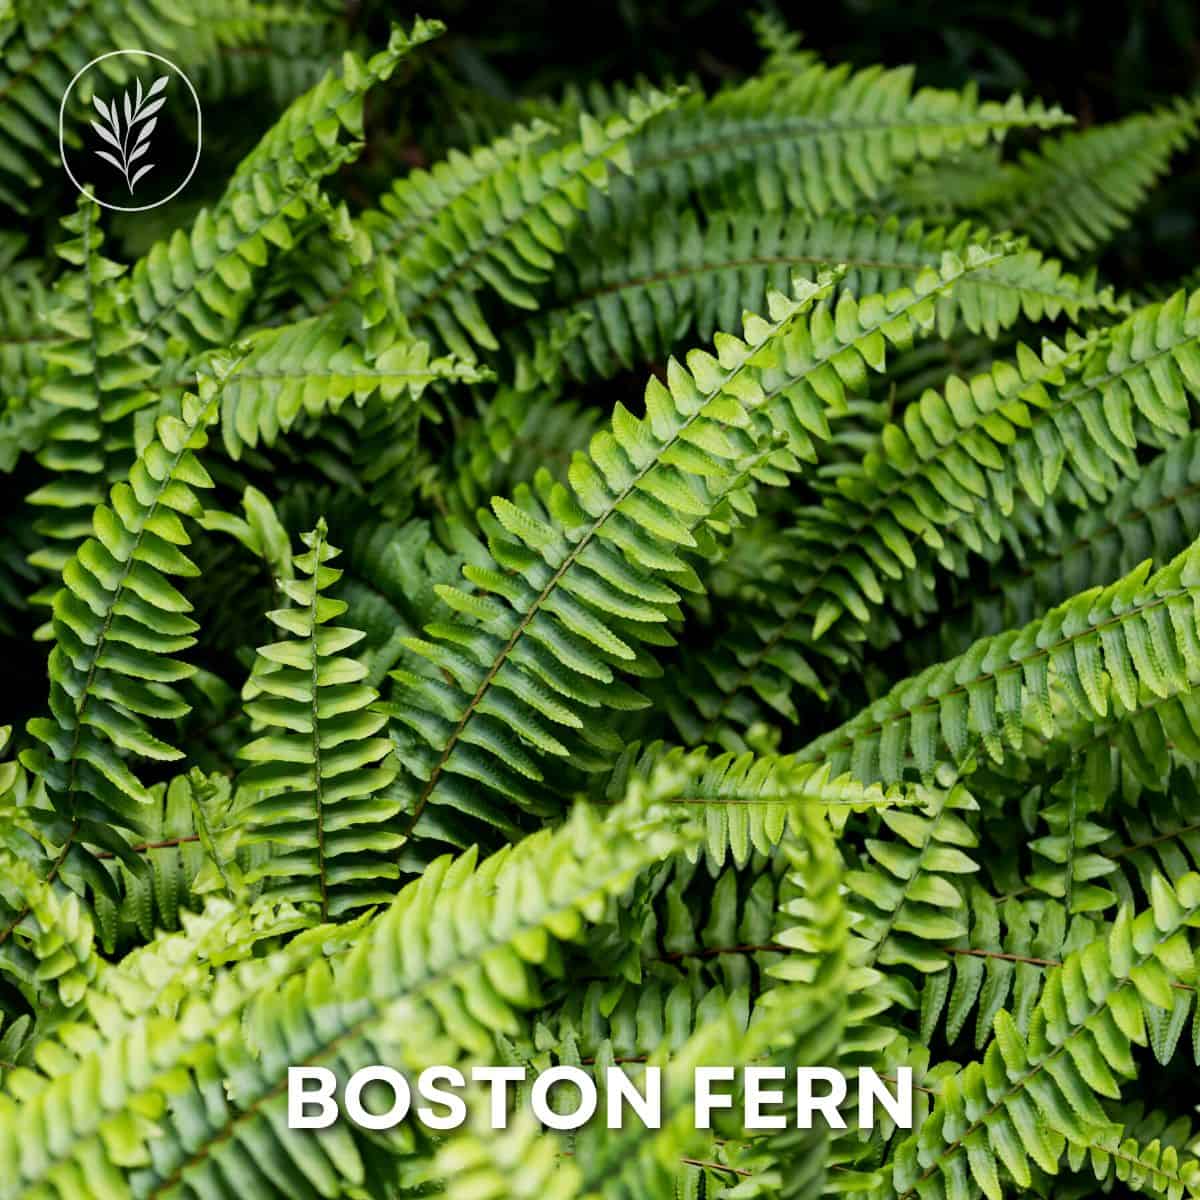 Boston fern via @home4theharvest